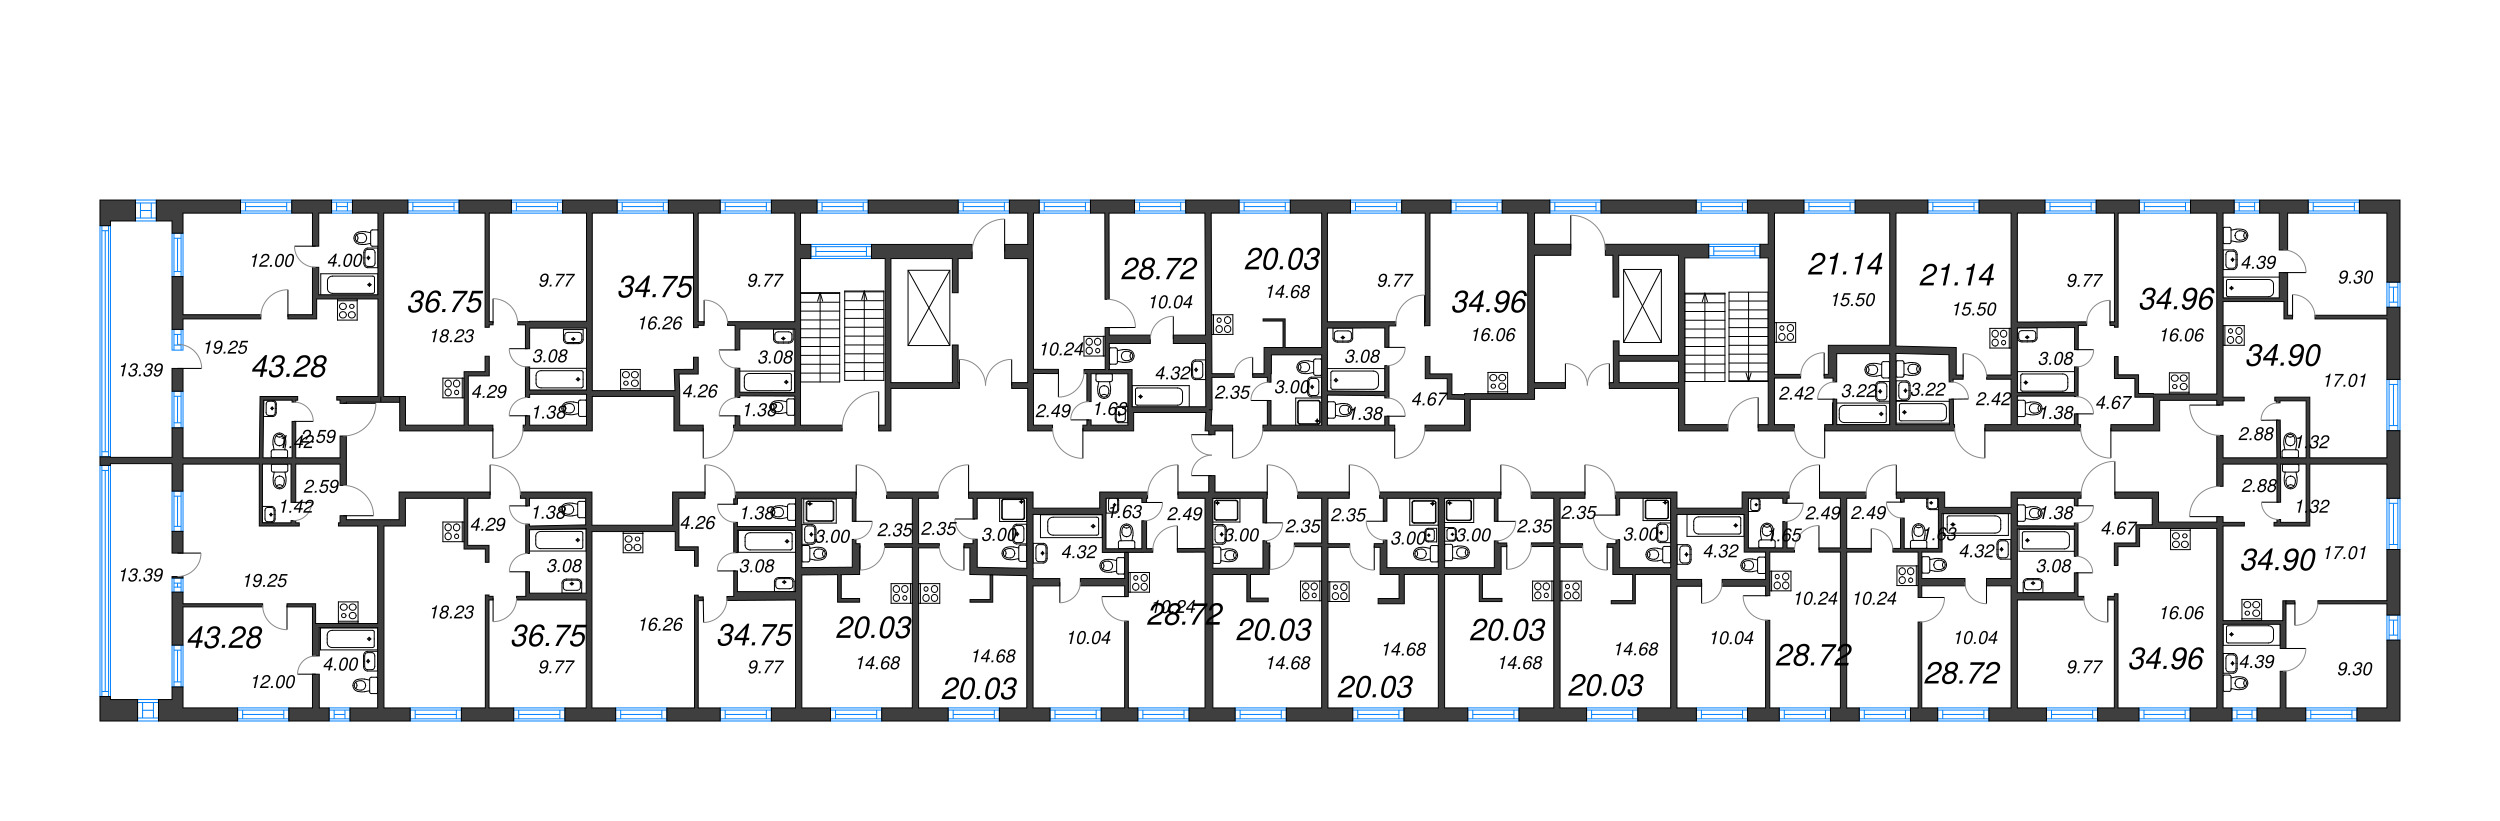 2-комнатная (Евро) квартира, 34.96 м² - планировка этажа